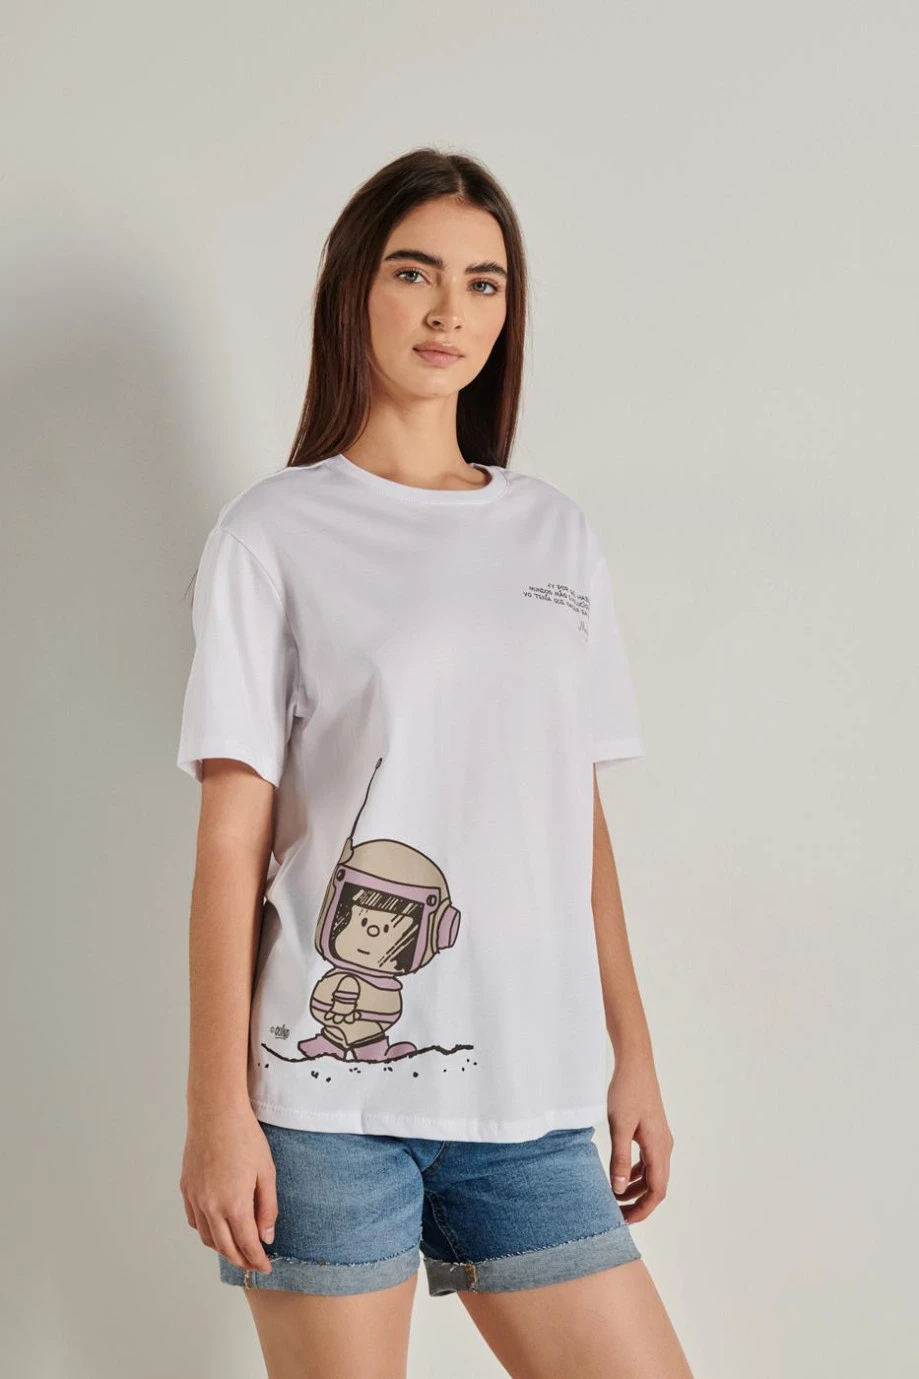 Camiseta manga corta blanca con diseño de Mafalda